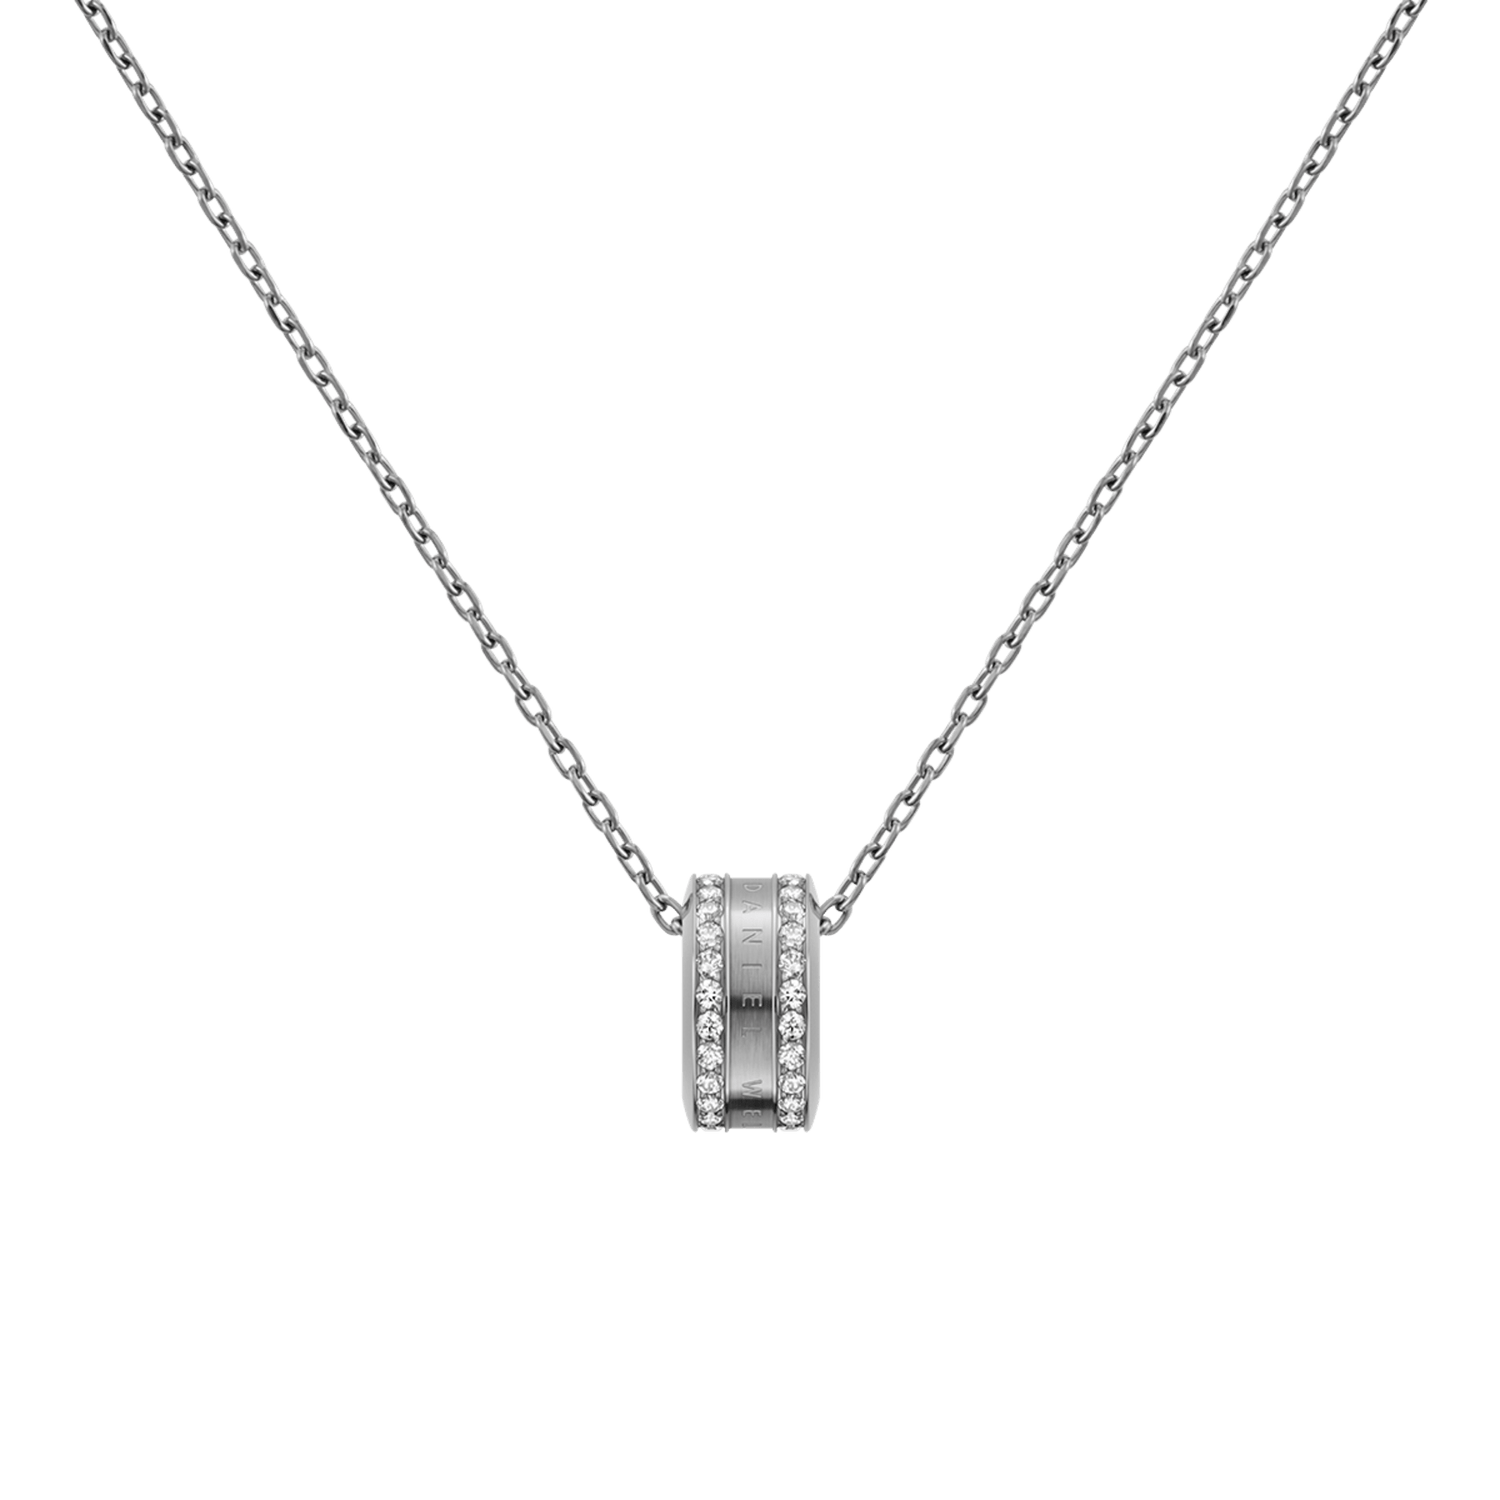 Elan Lumine Necklace Silver – Daniel Wellington